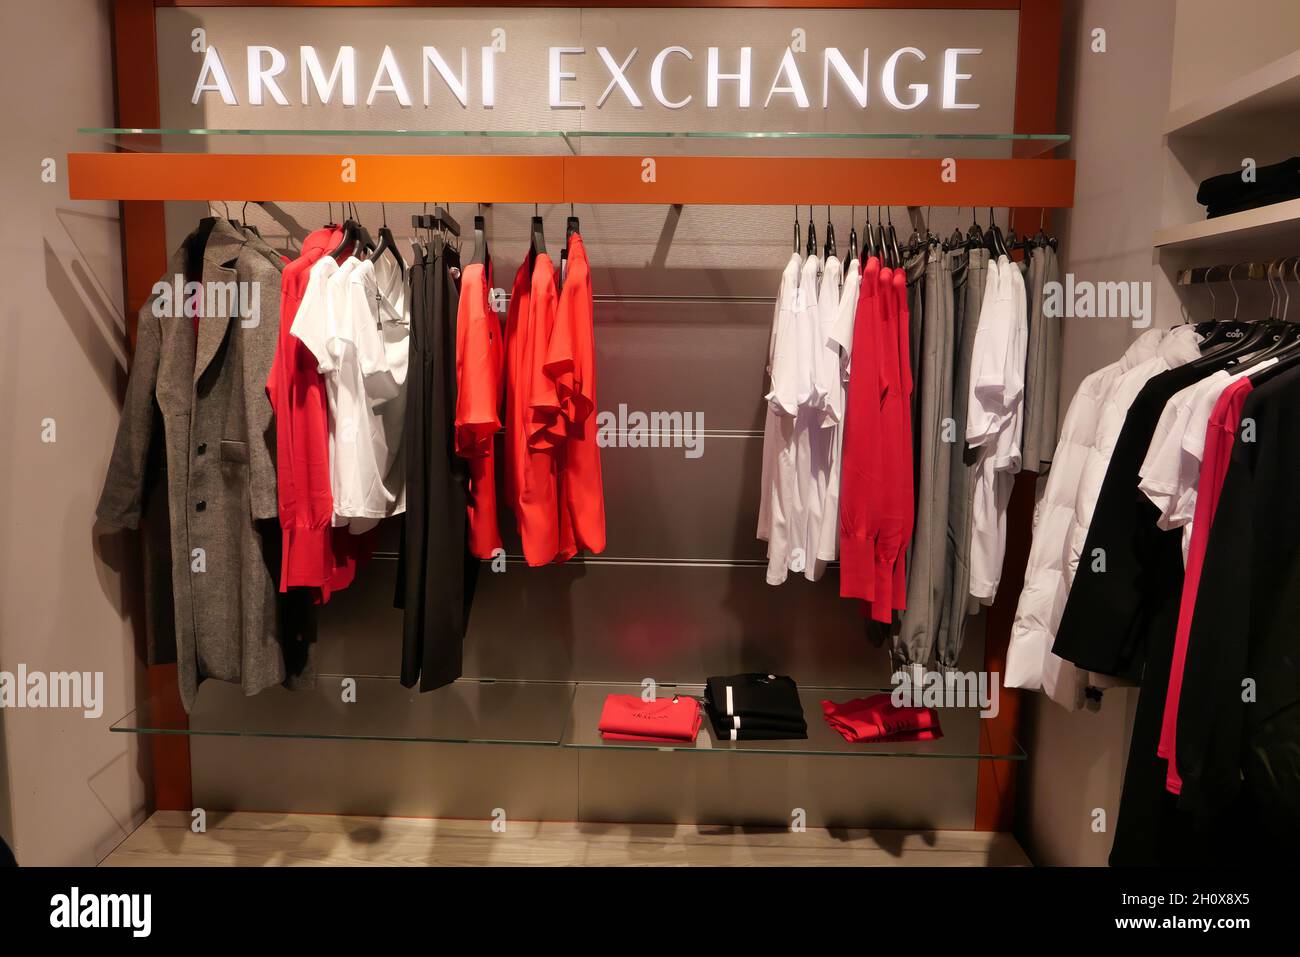 ARMANI EXCHANGE CLOTHING ON DISPLAY INSIDE THE FASHION STORE Stock Photo -  Alamy